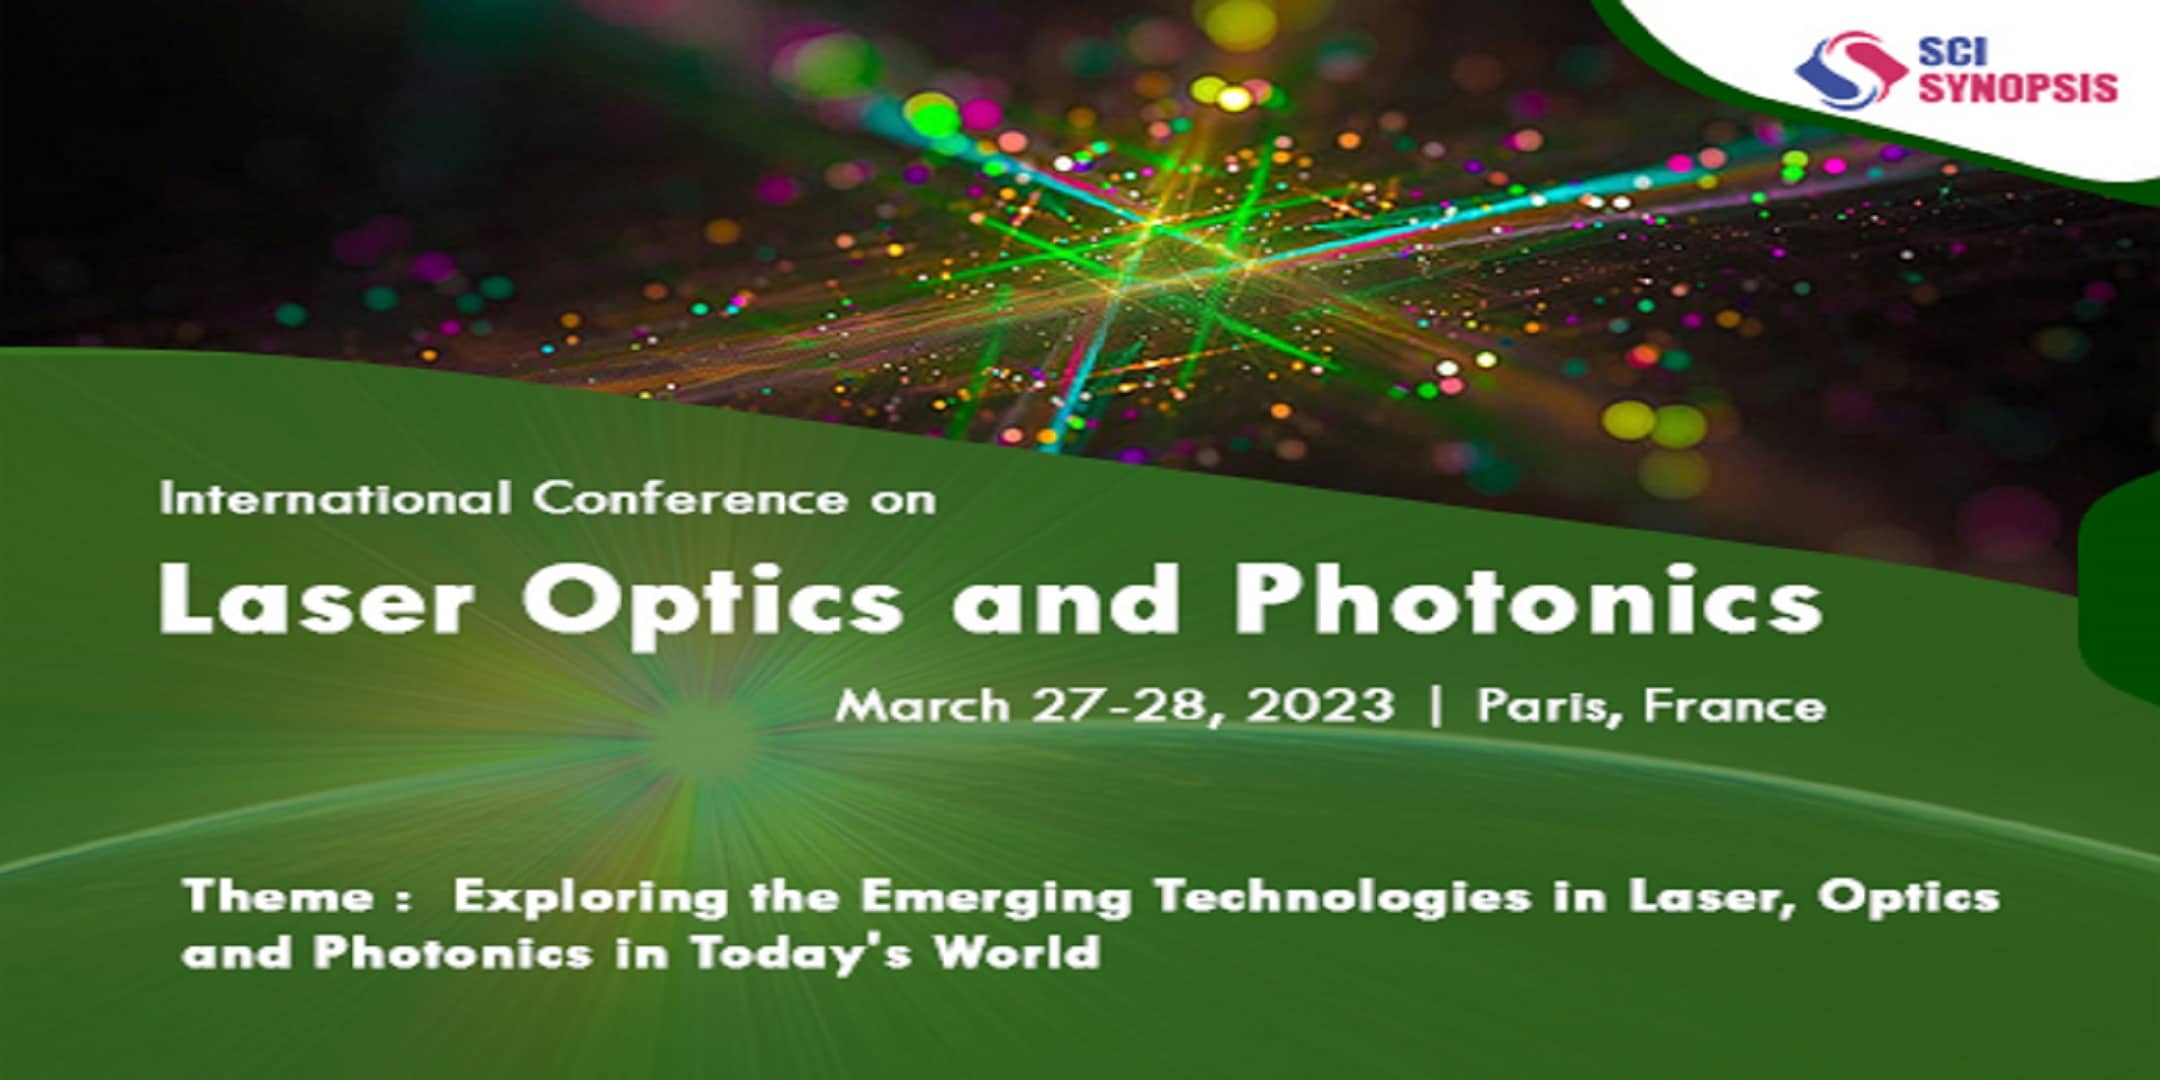 International Conference on Laser, Optics and Photonics